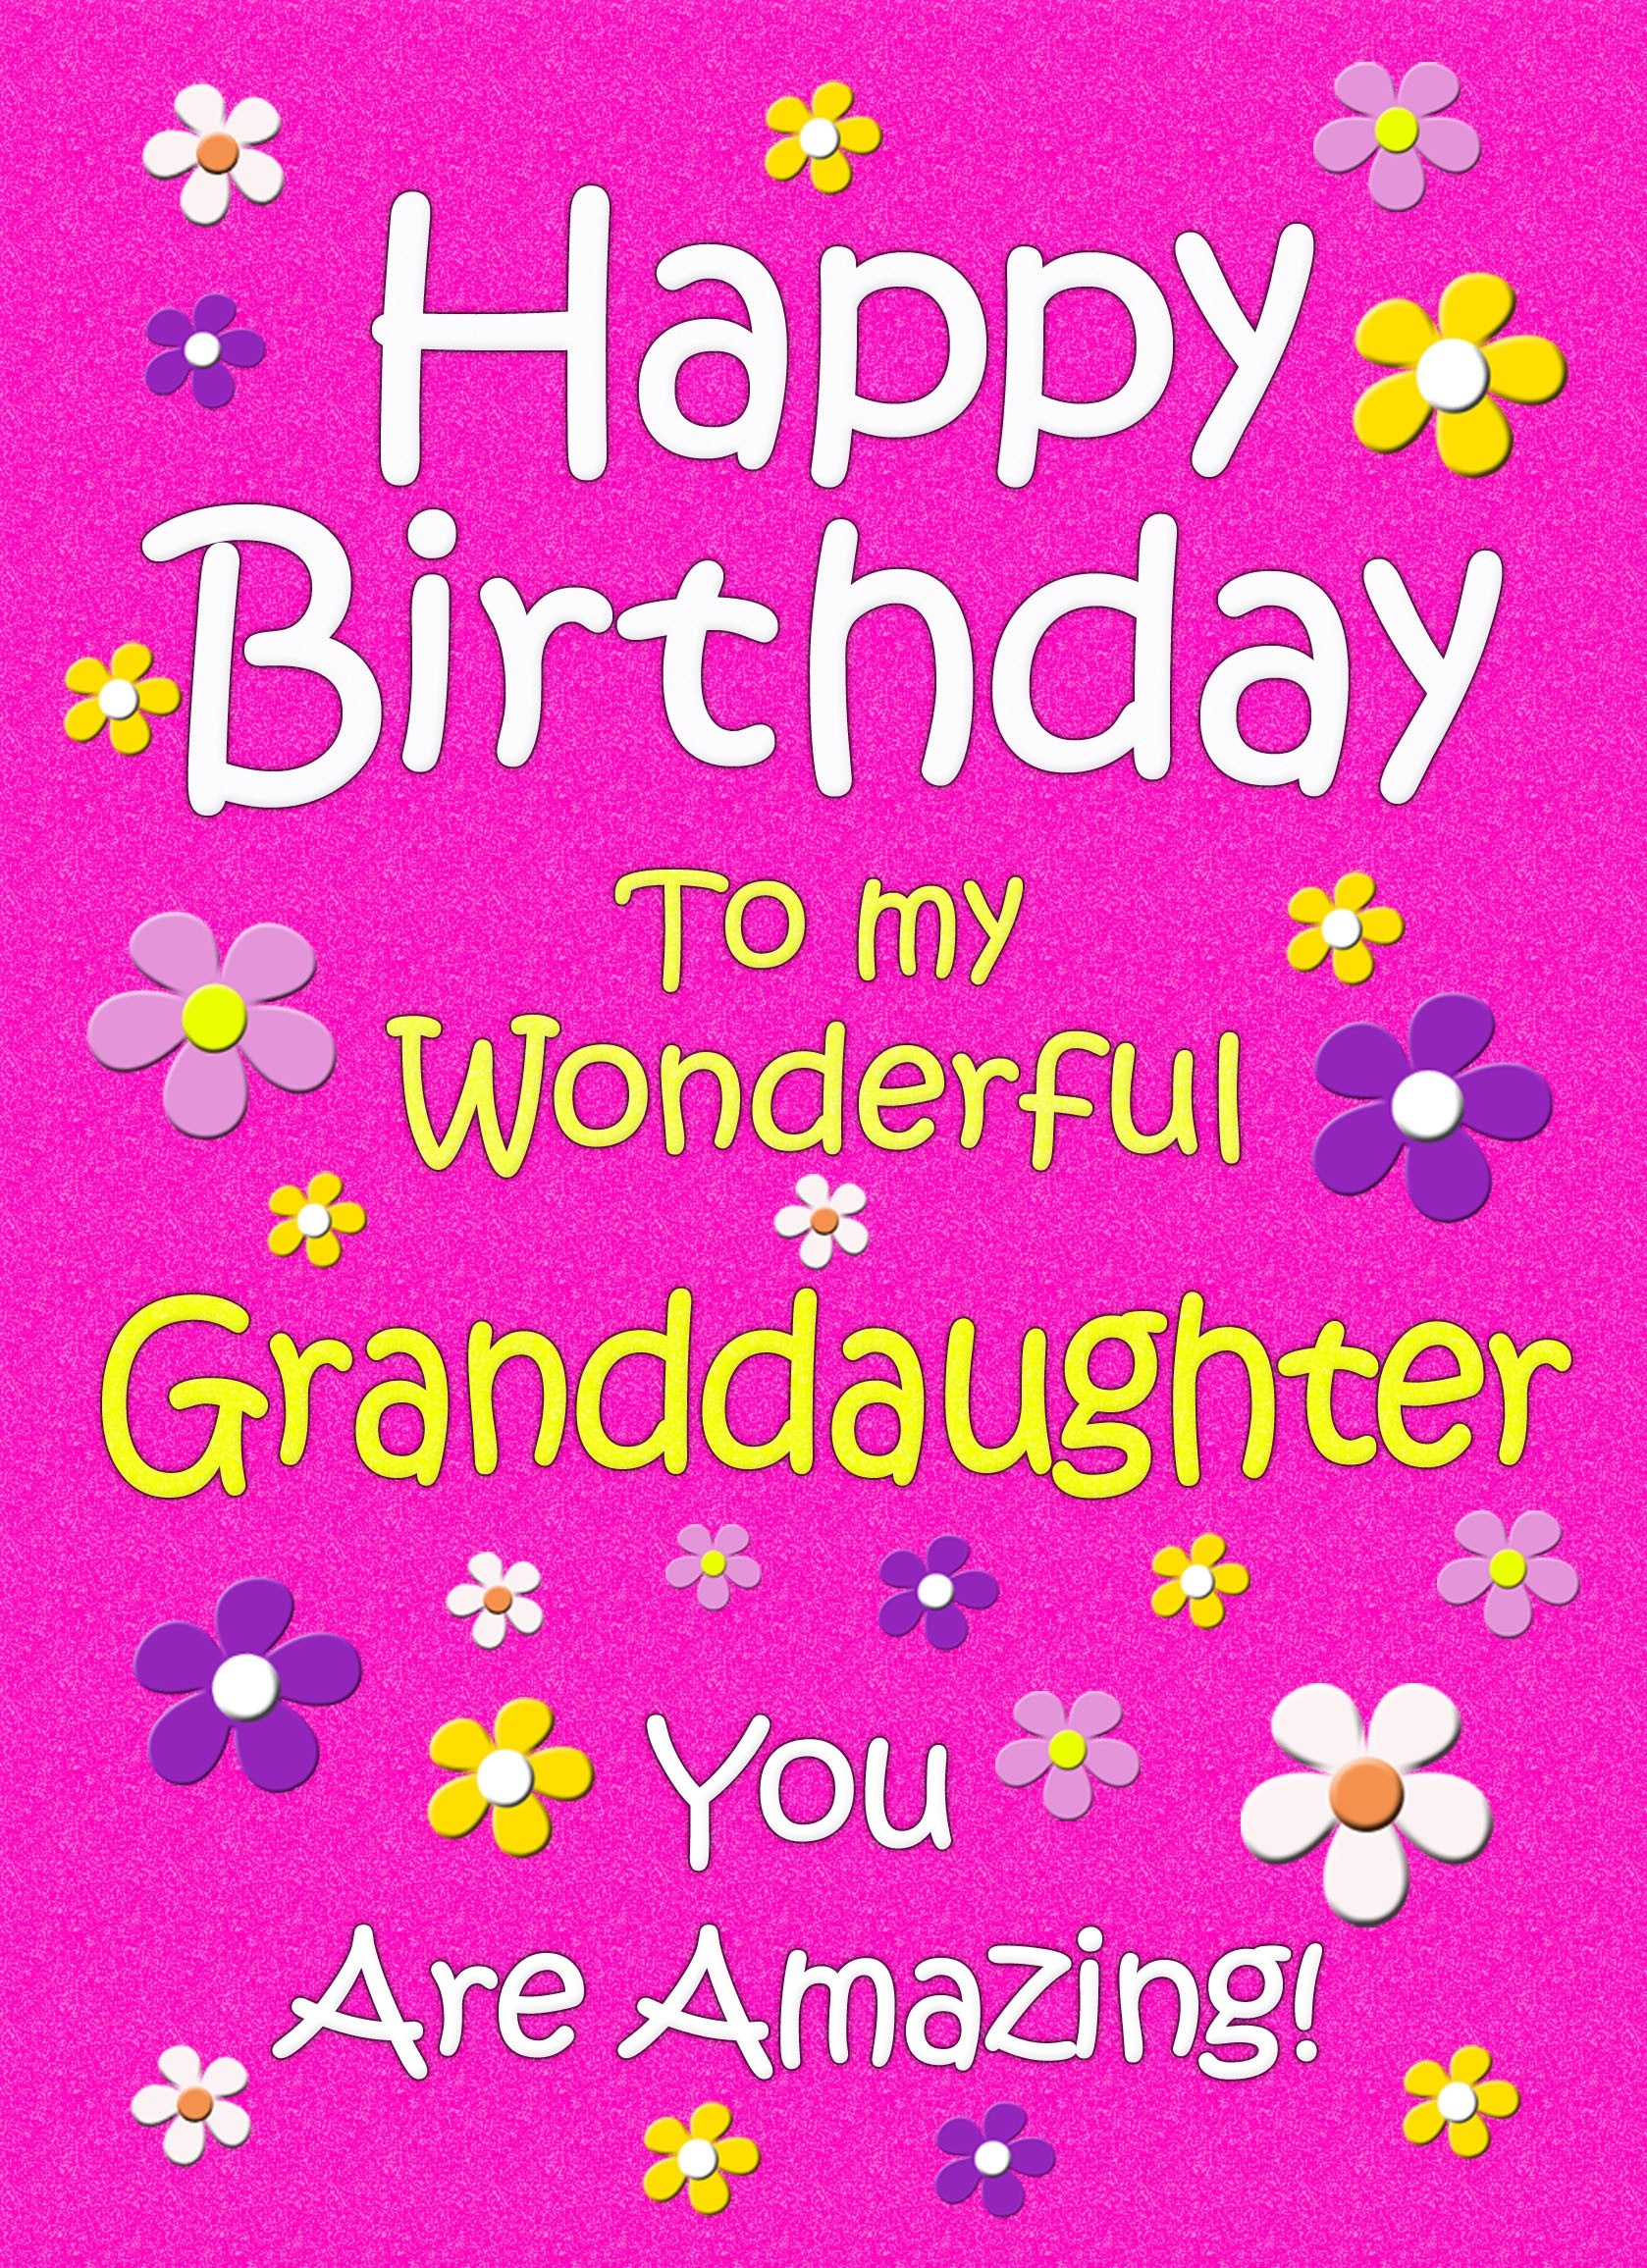 Granddaughter Birthday Card (Cerise)